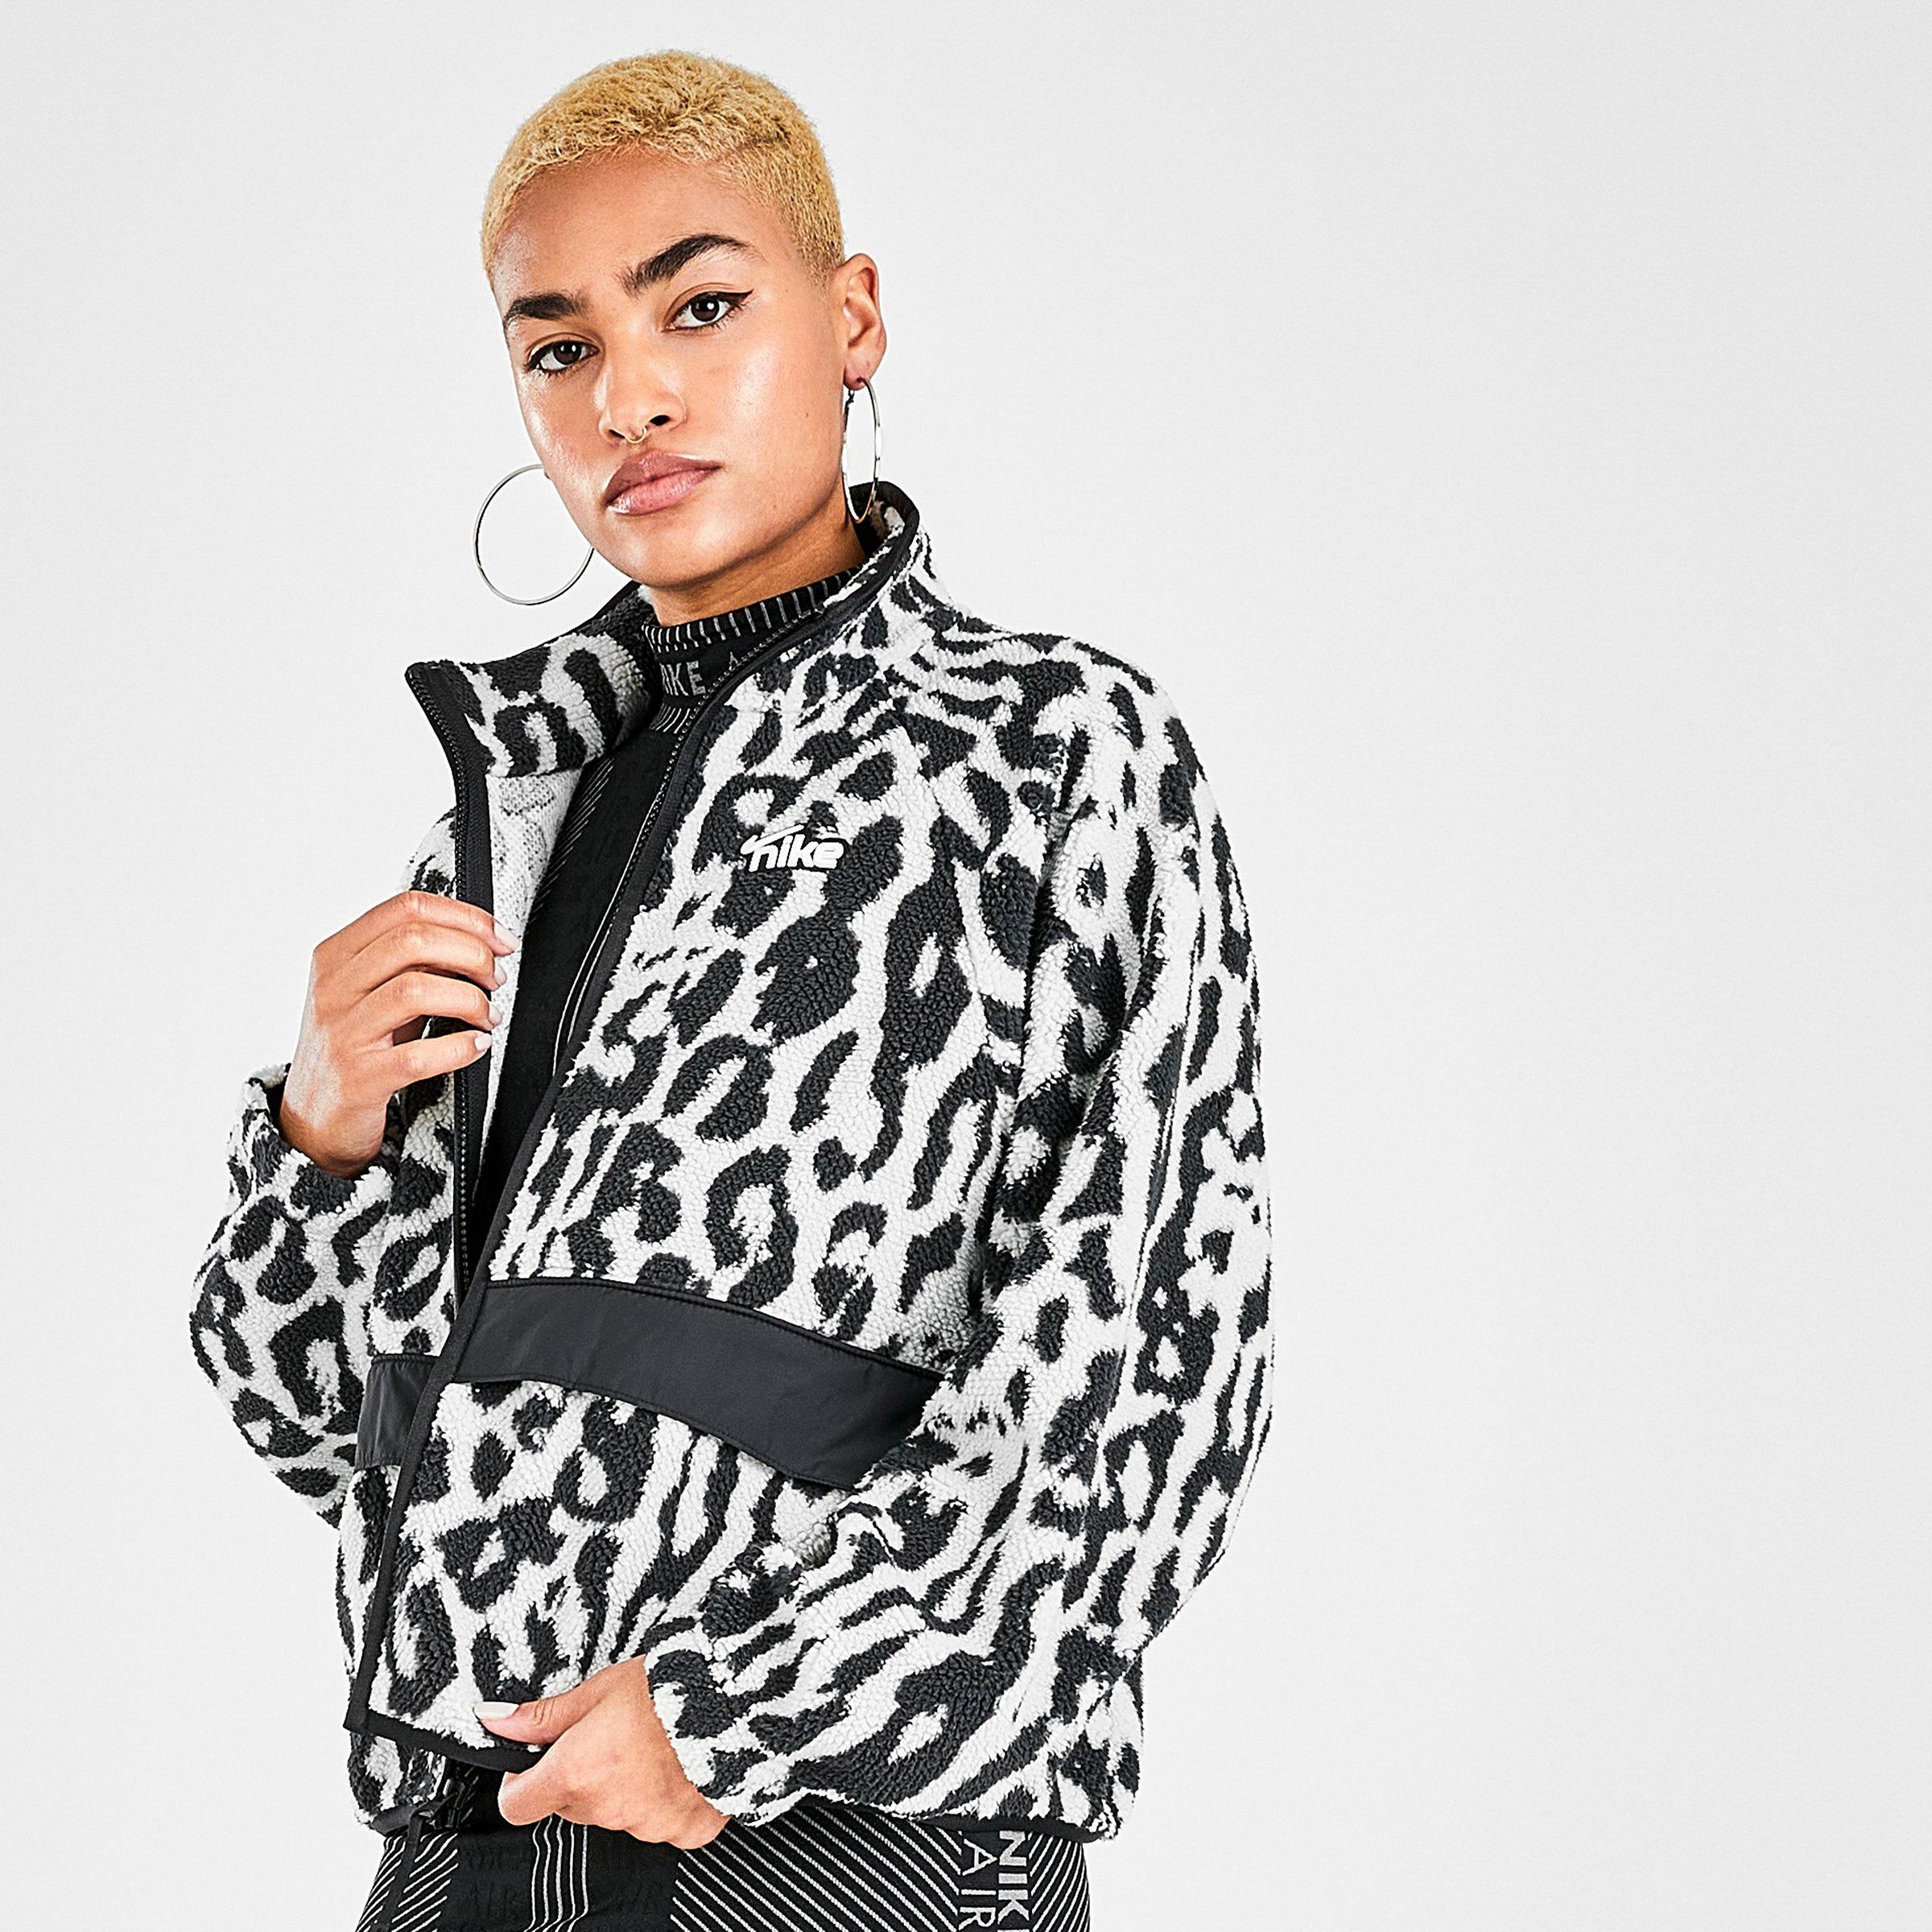 leopard print nike jacket